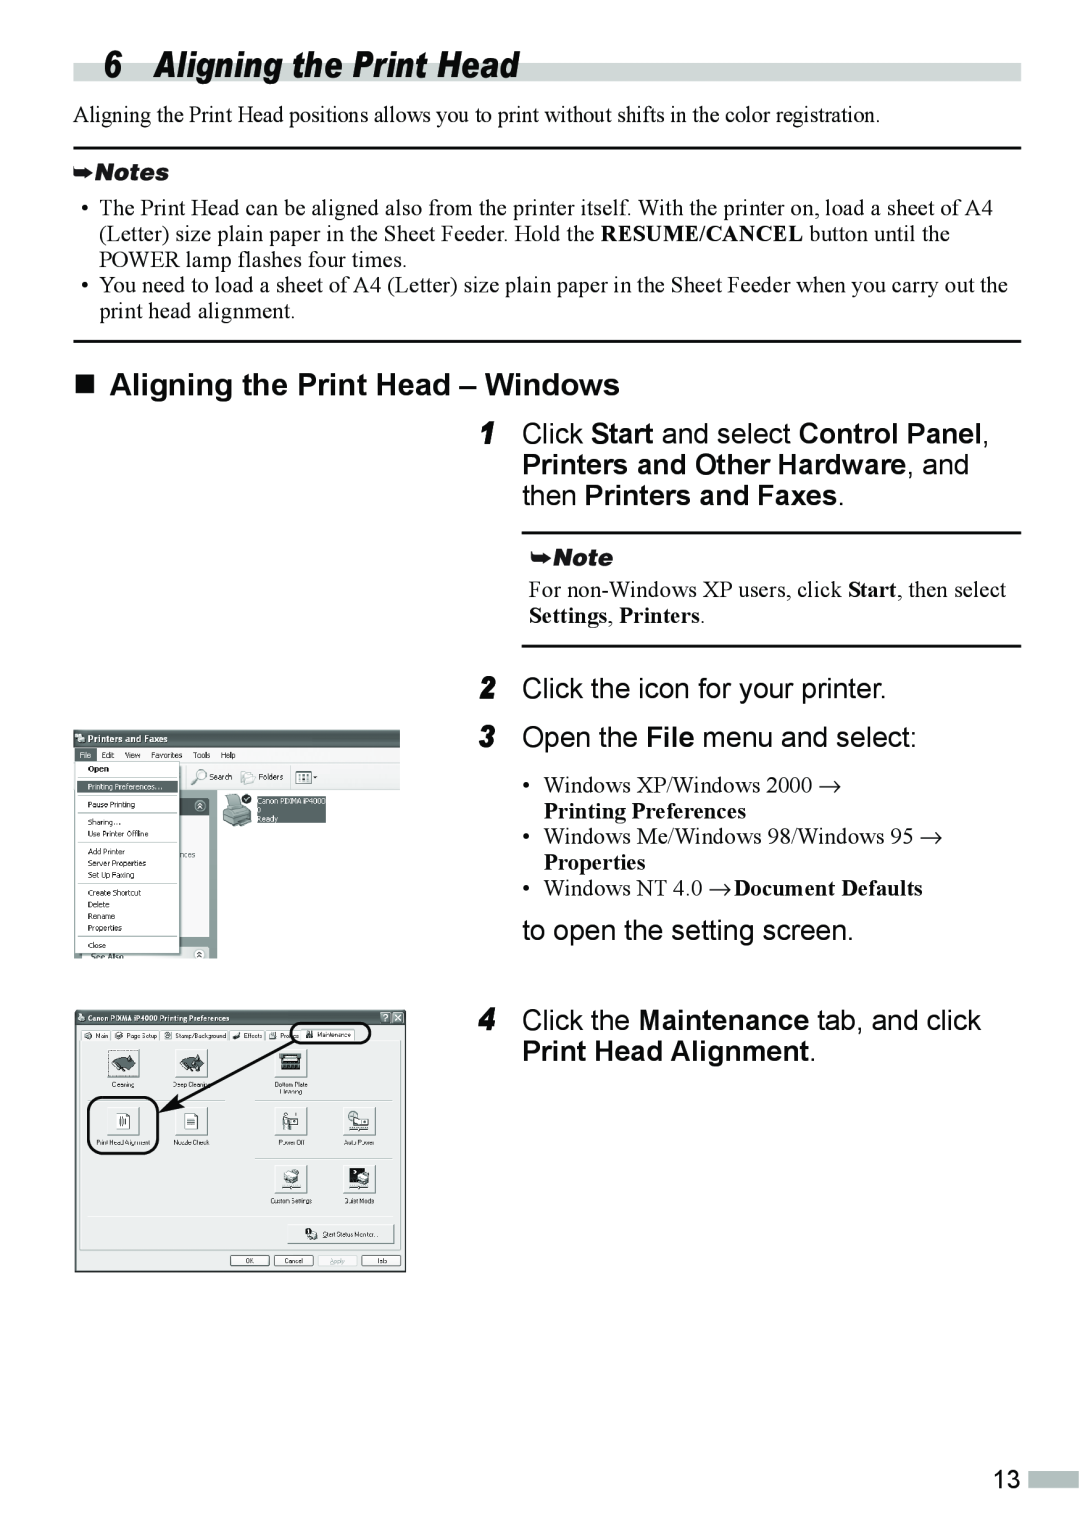 Canon IP4000 „Aligning the Print Head - Windows, Print Head Alignment, Settings, Printers, Printing Preferences 